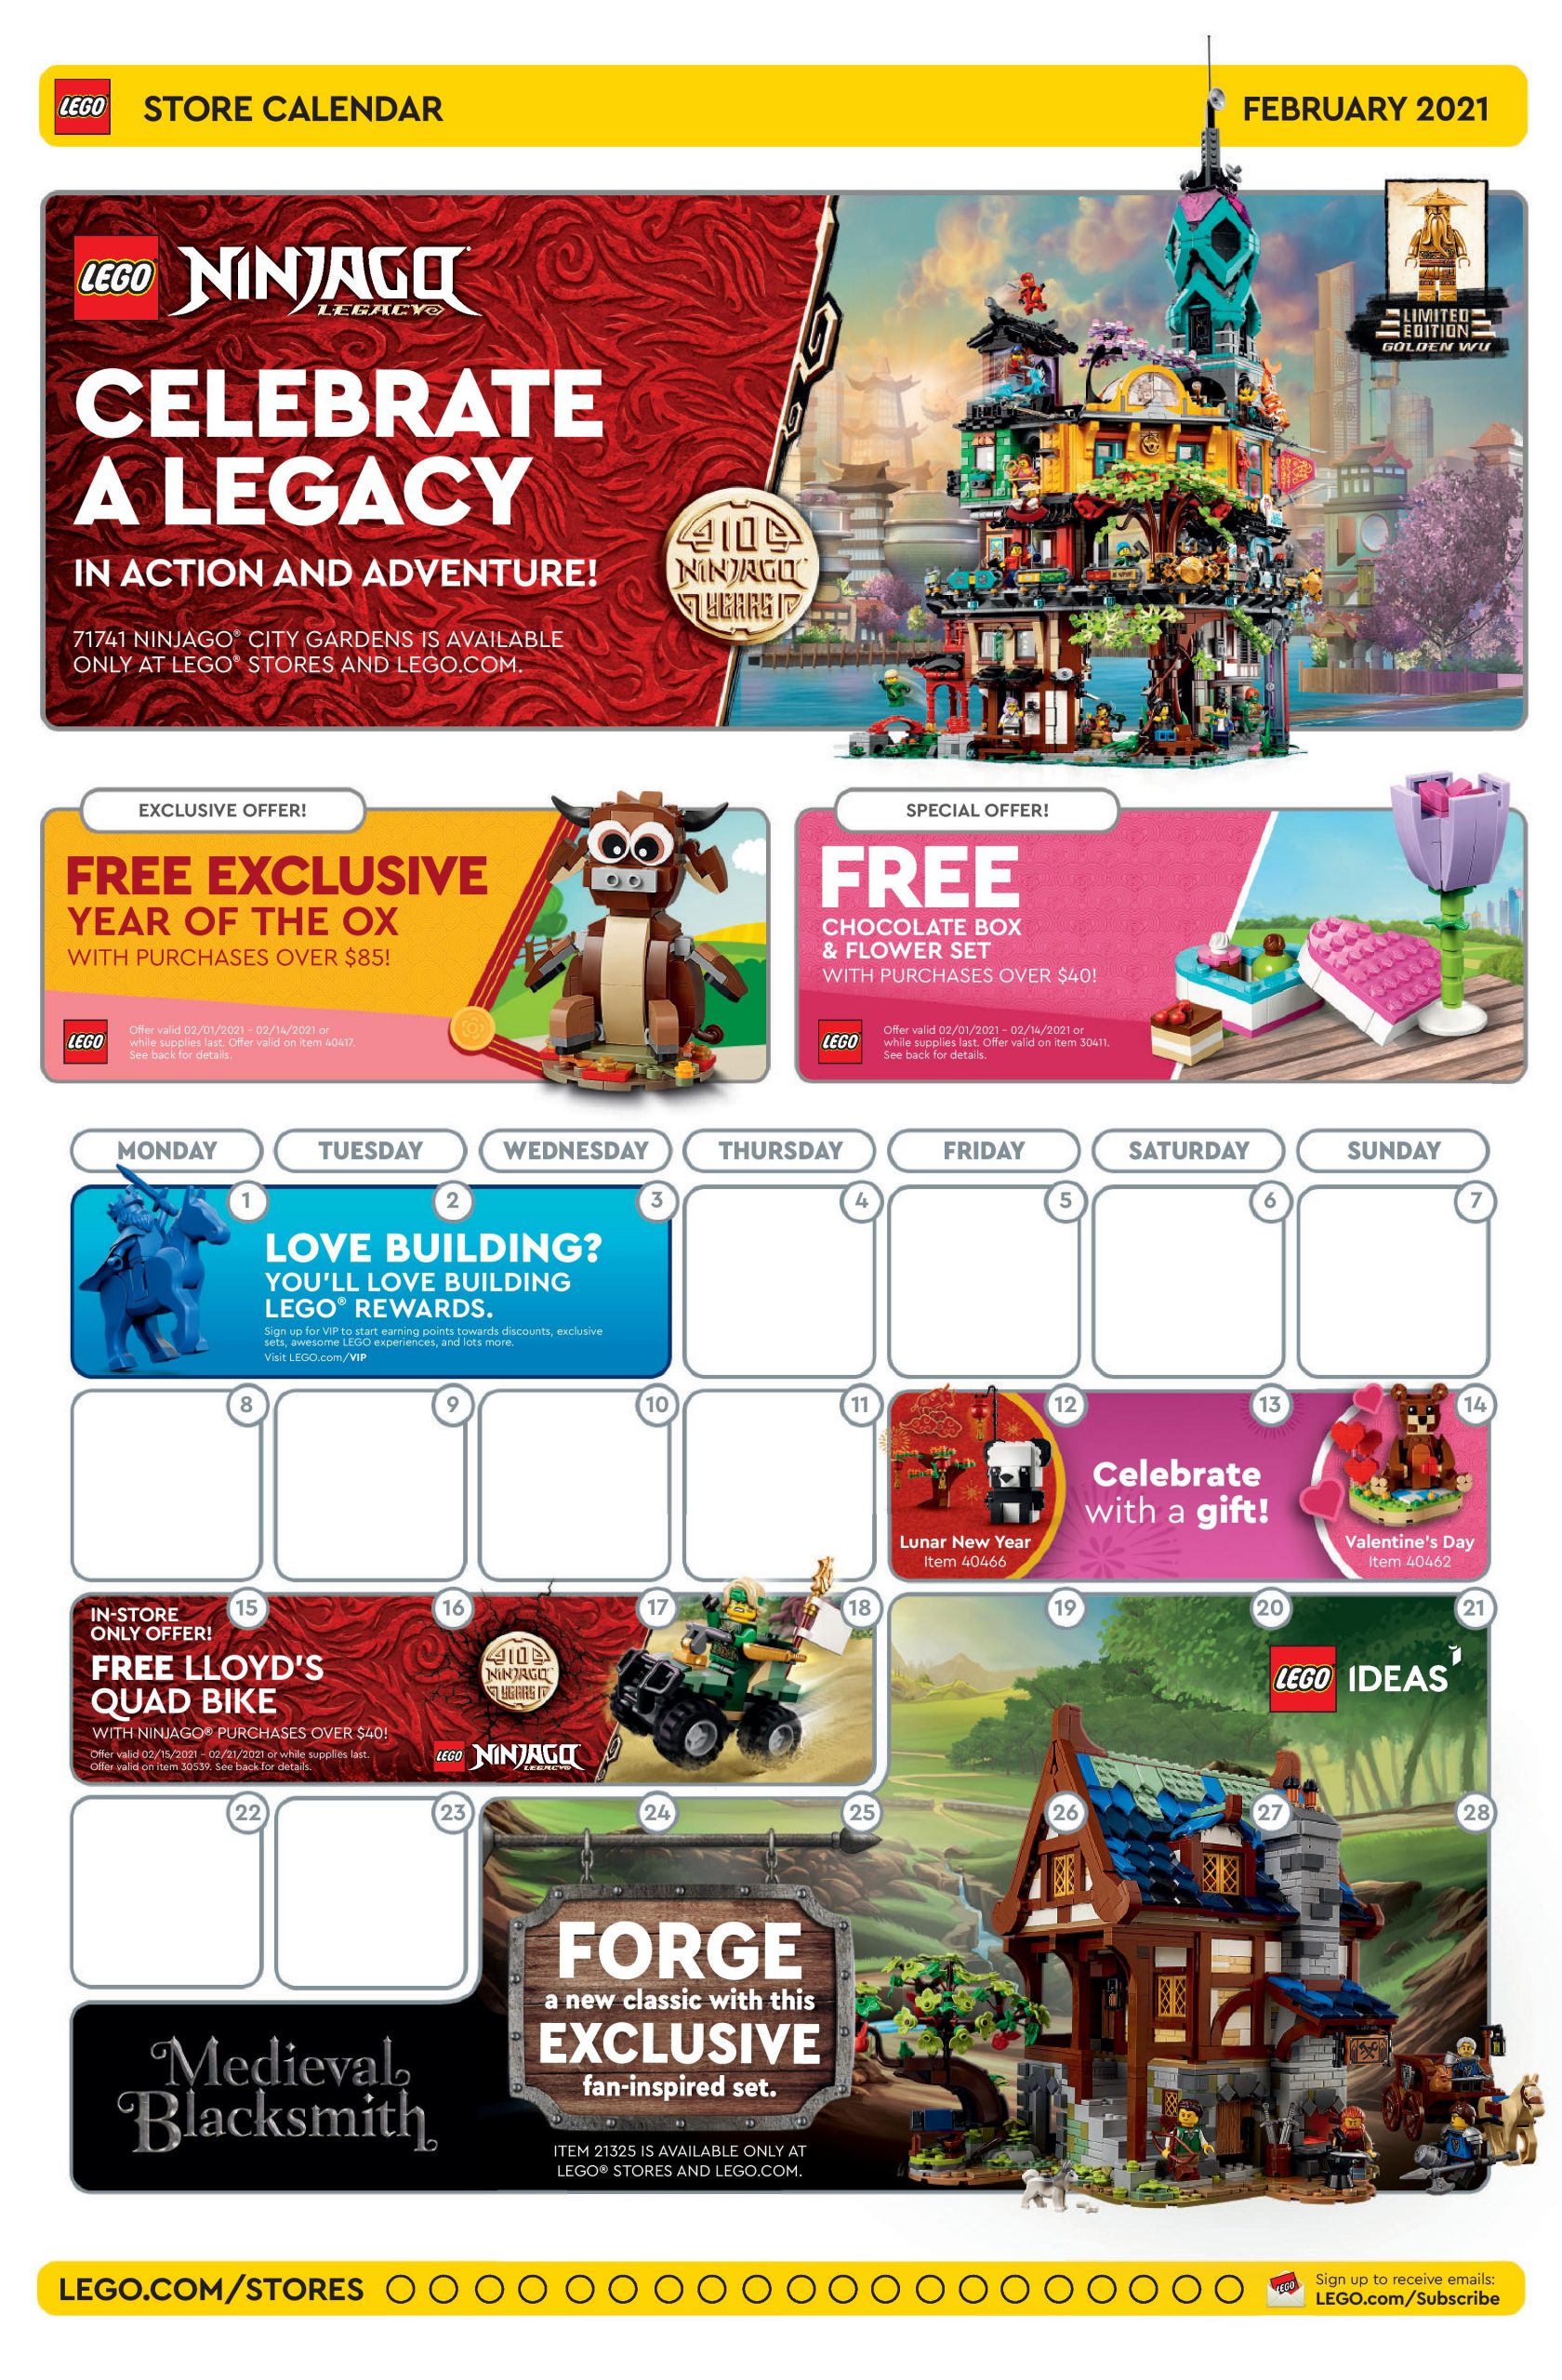 Lego April 2022 Calendar Lego February 2021 Store Calendar Promotions & Events - The Brick Fan